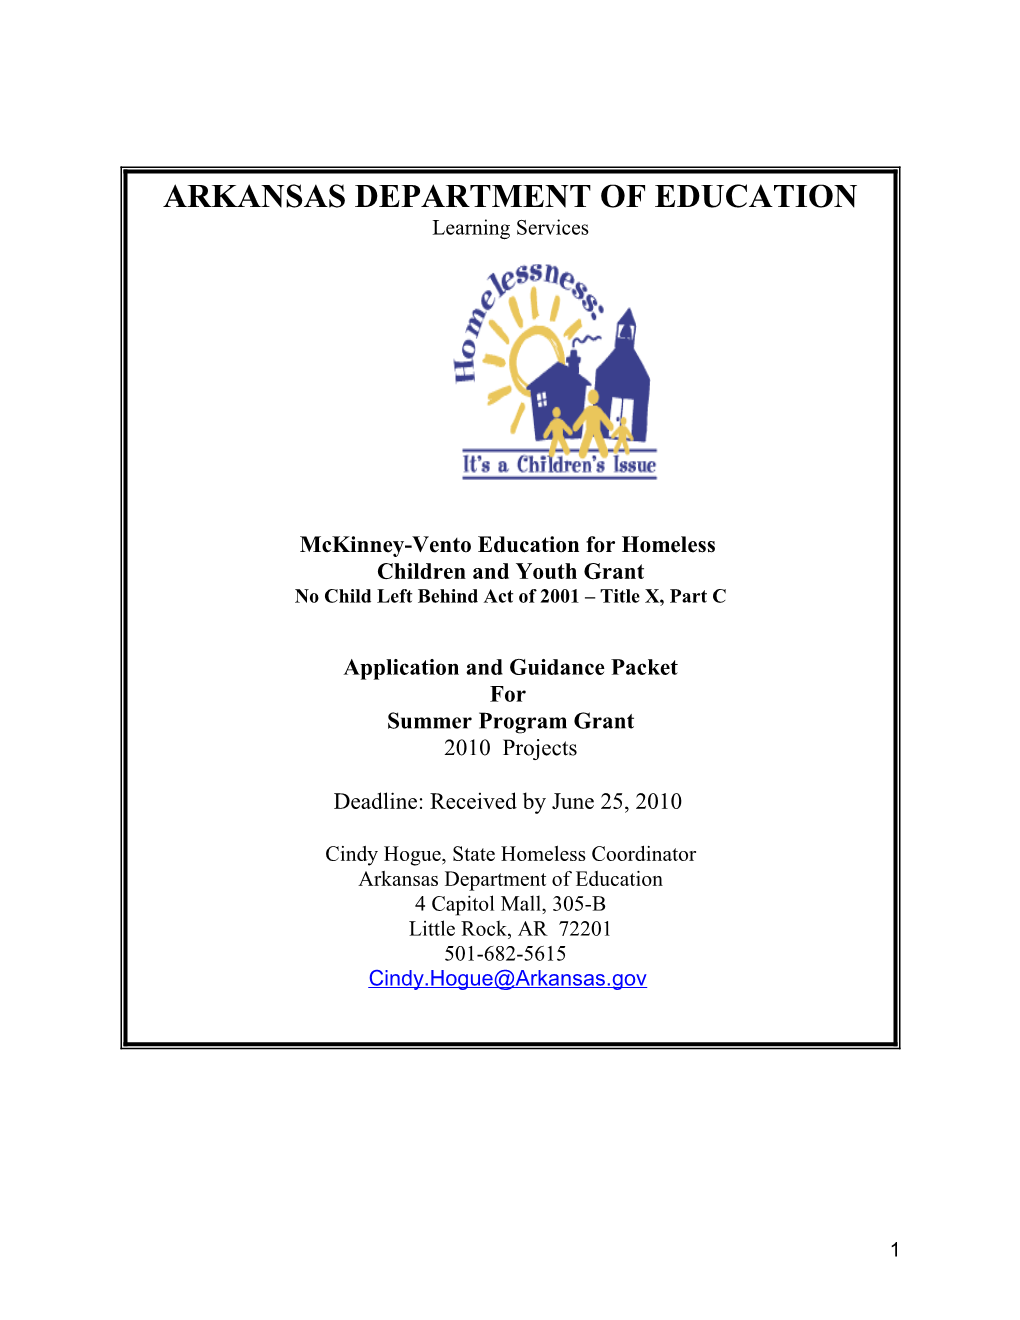 Arkansas Department of Education s4